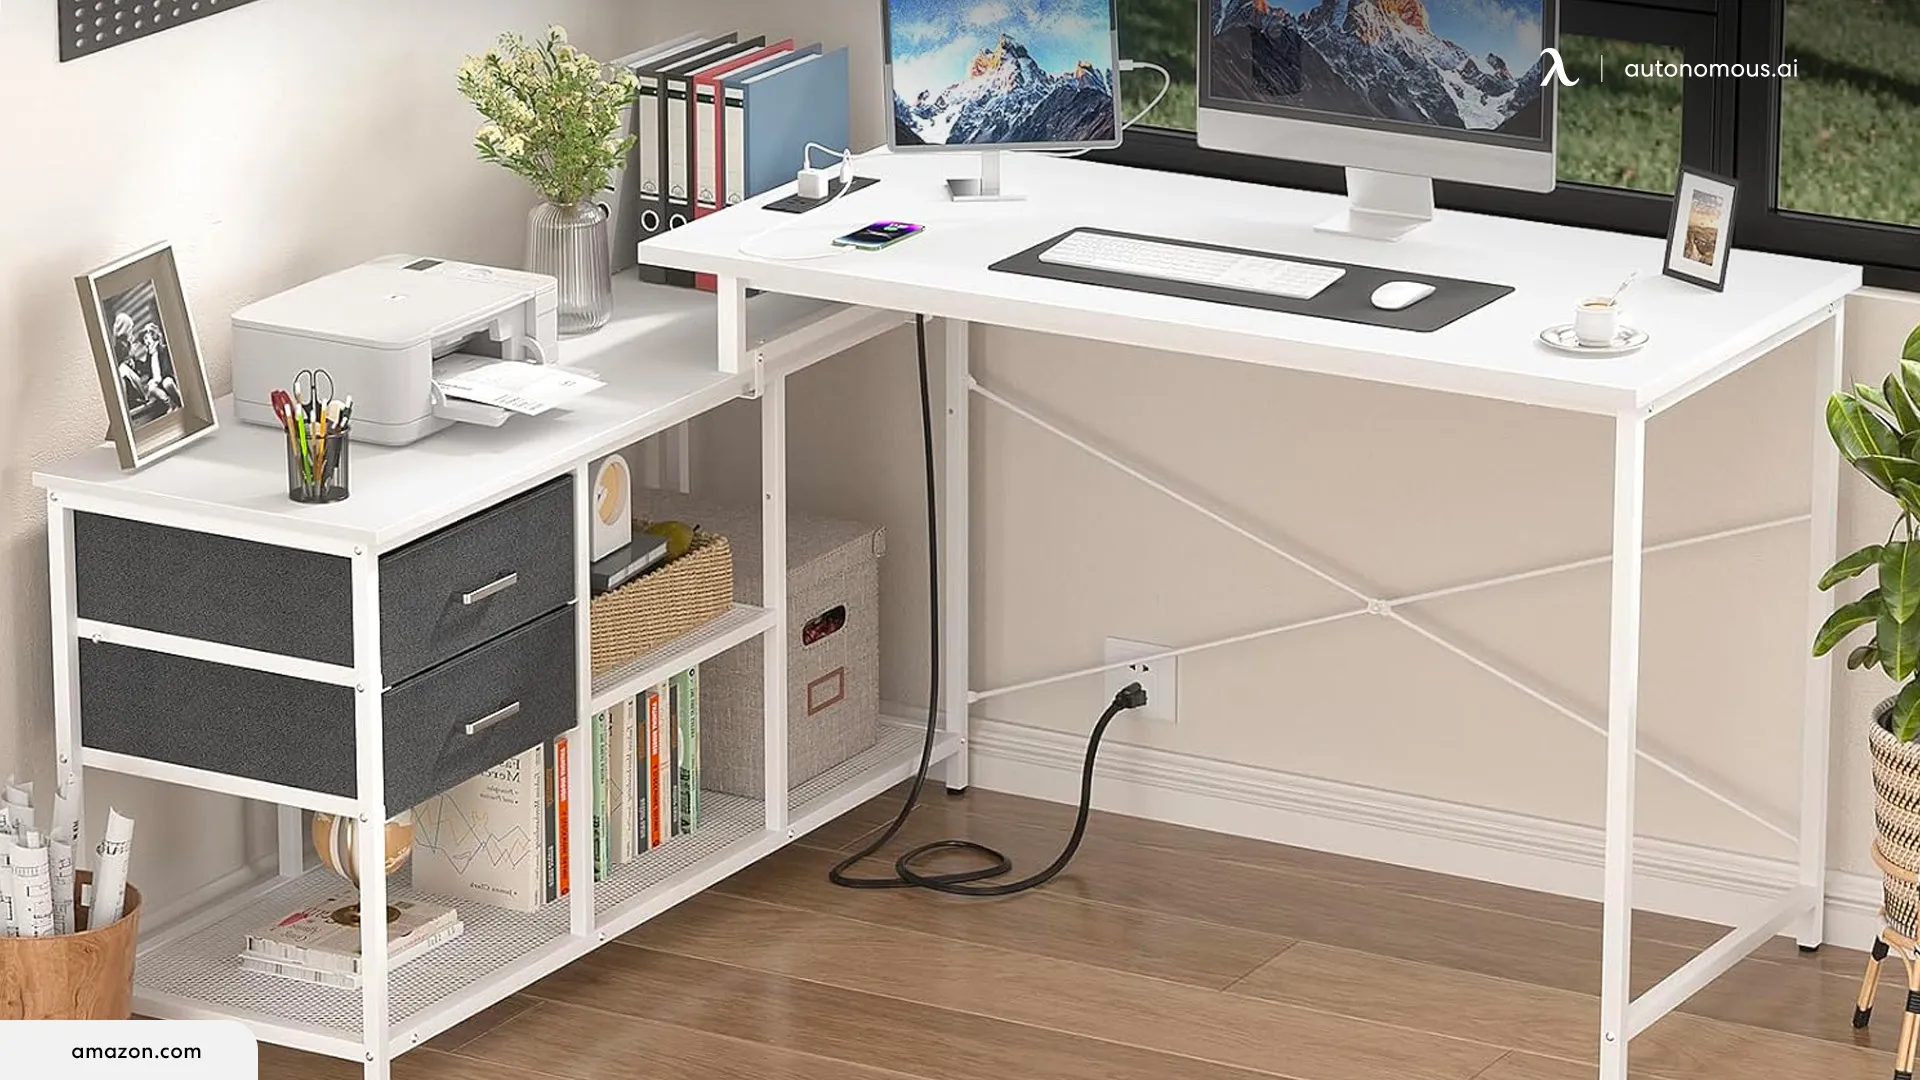 Drawbacks of Office Desks with Shelves